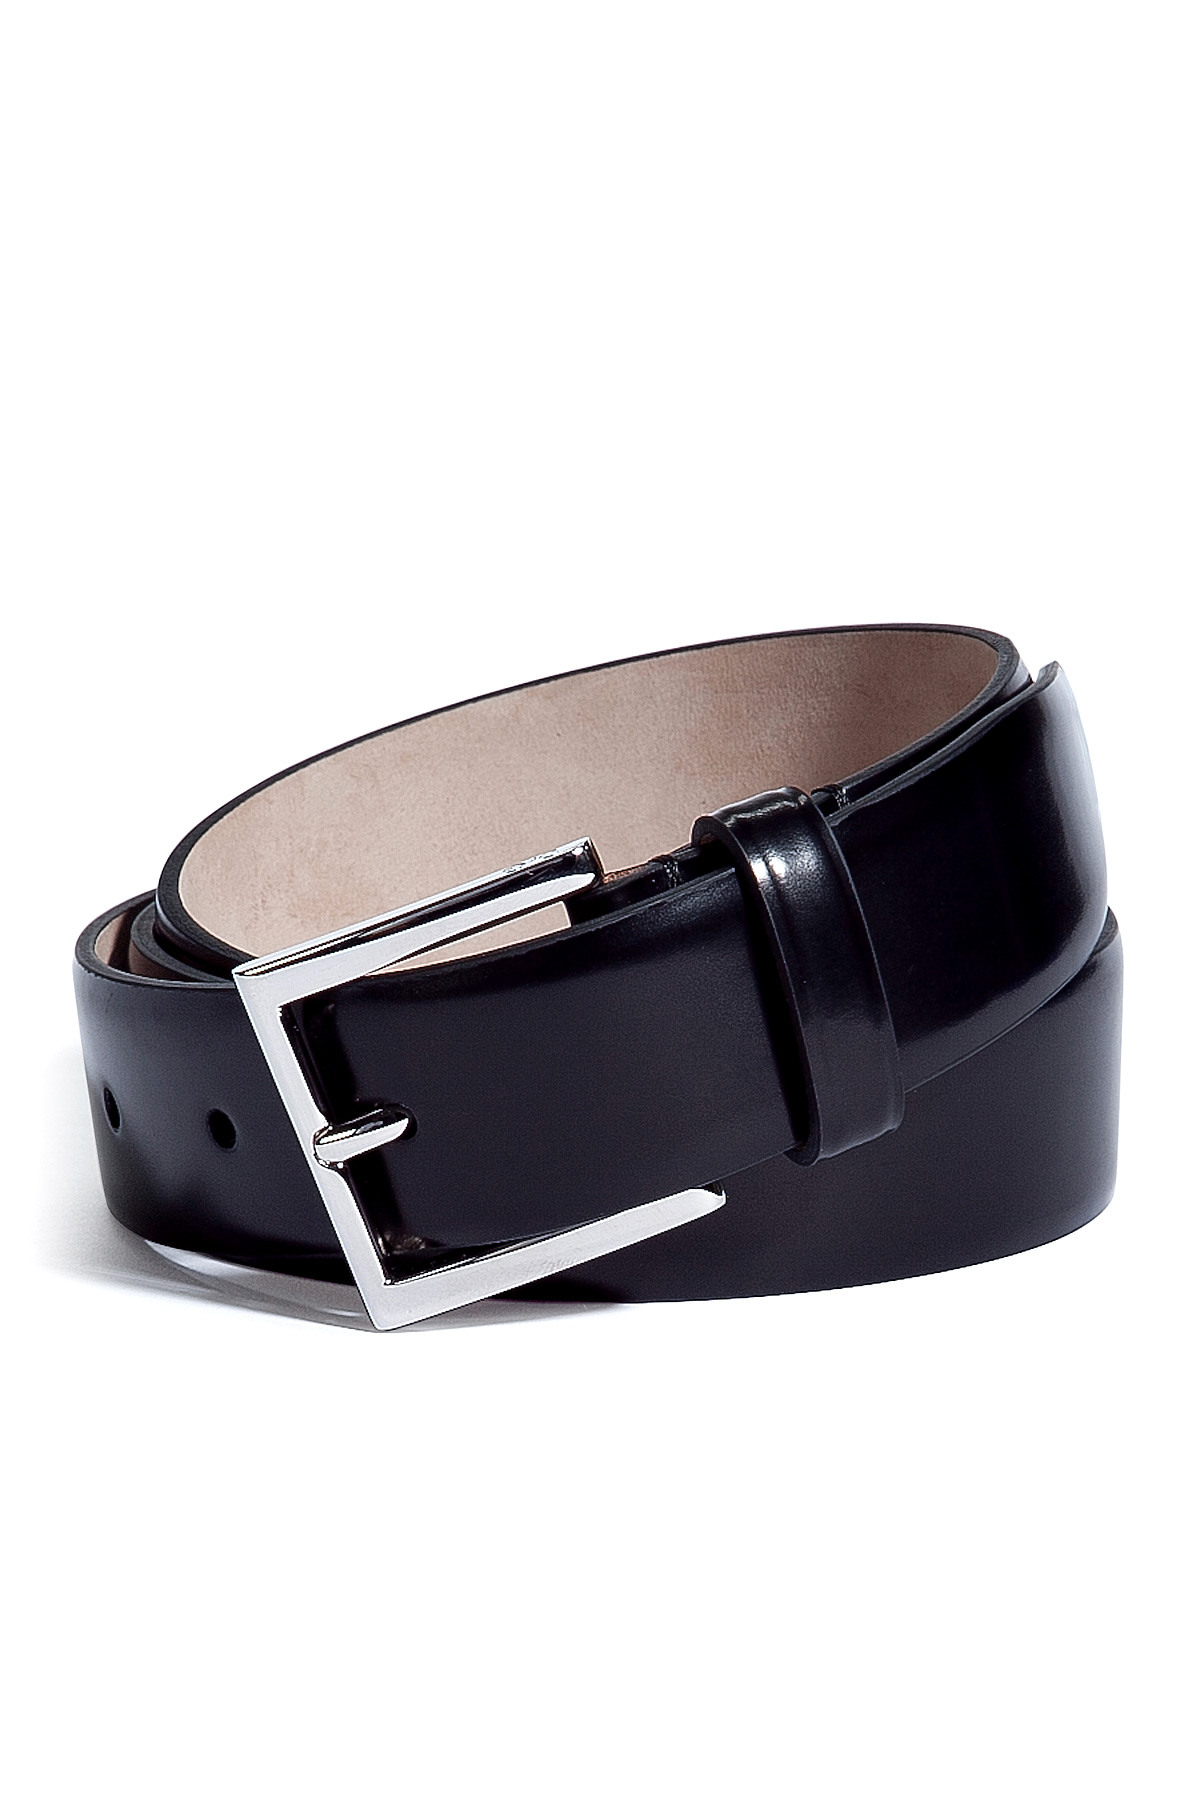 Lyst - Dolce & Gabbana Black Leather Belt in Black for Men